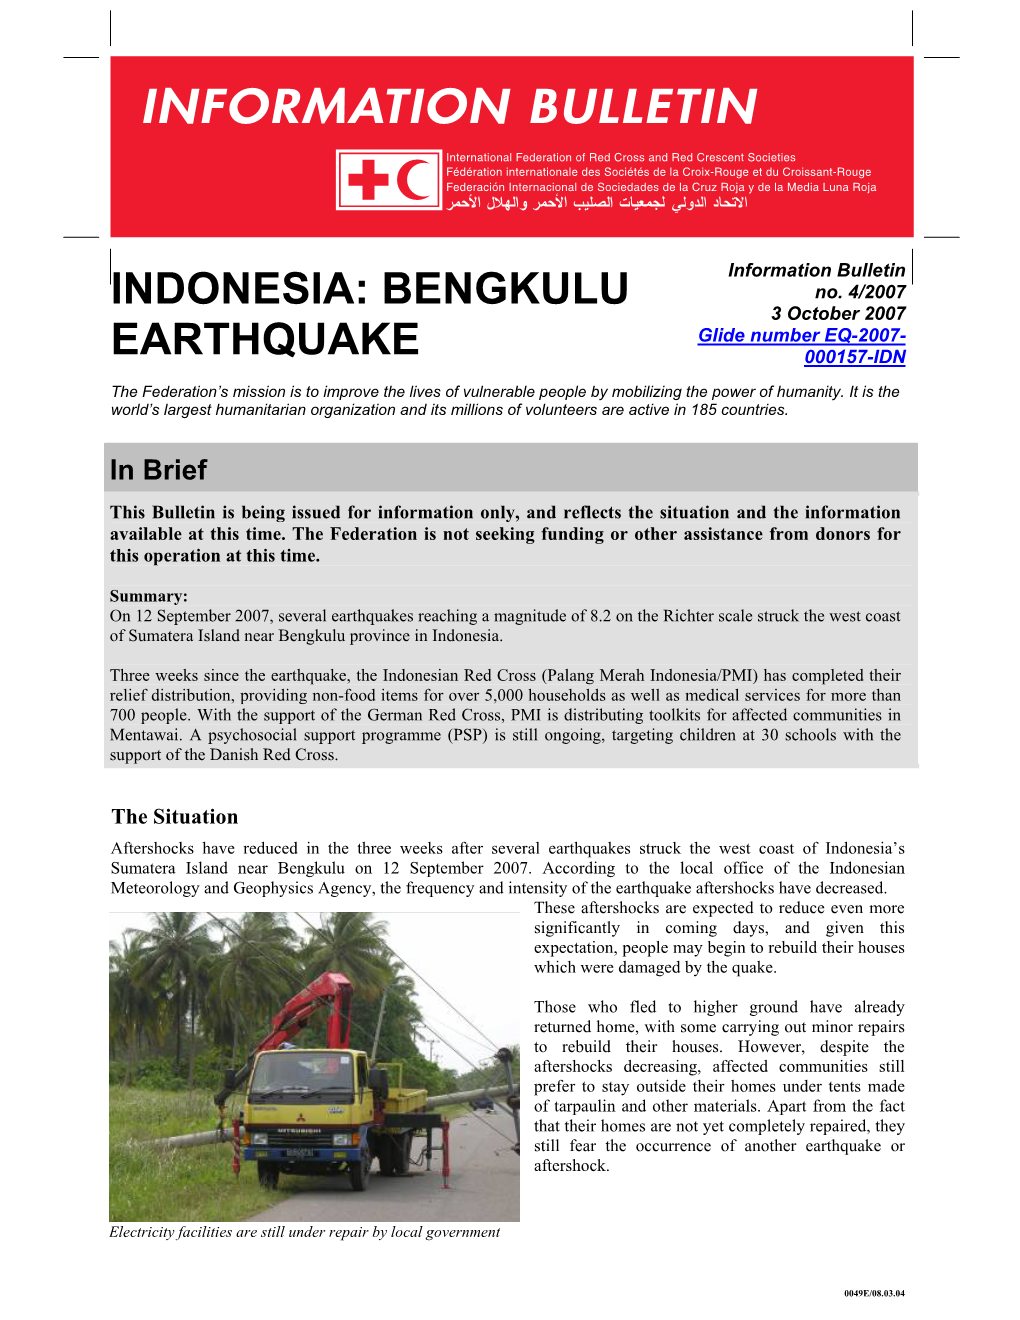 Bengkulu Earthquake; Information Bulletin No